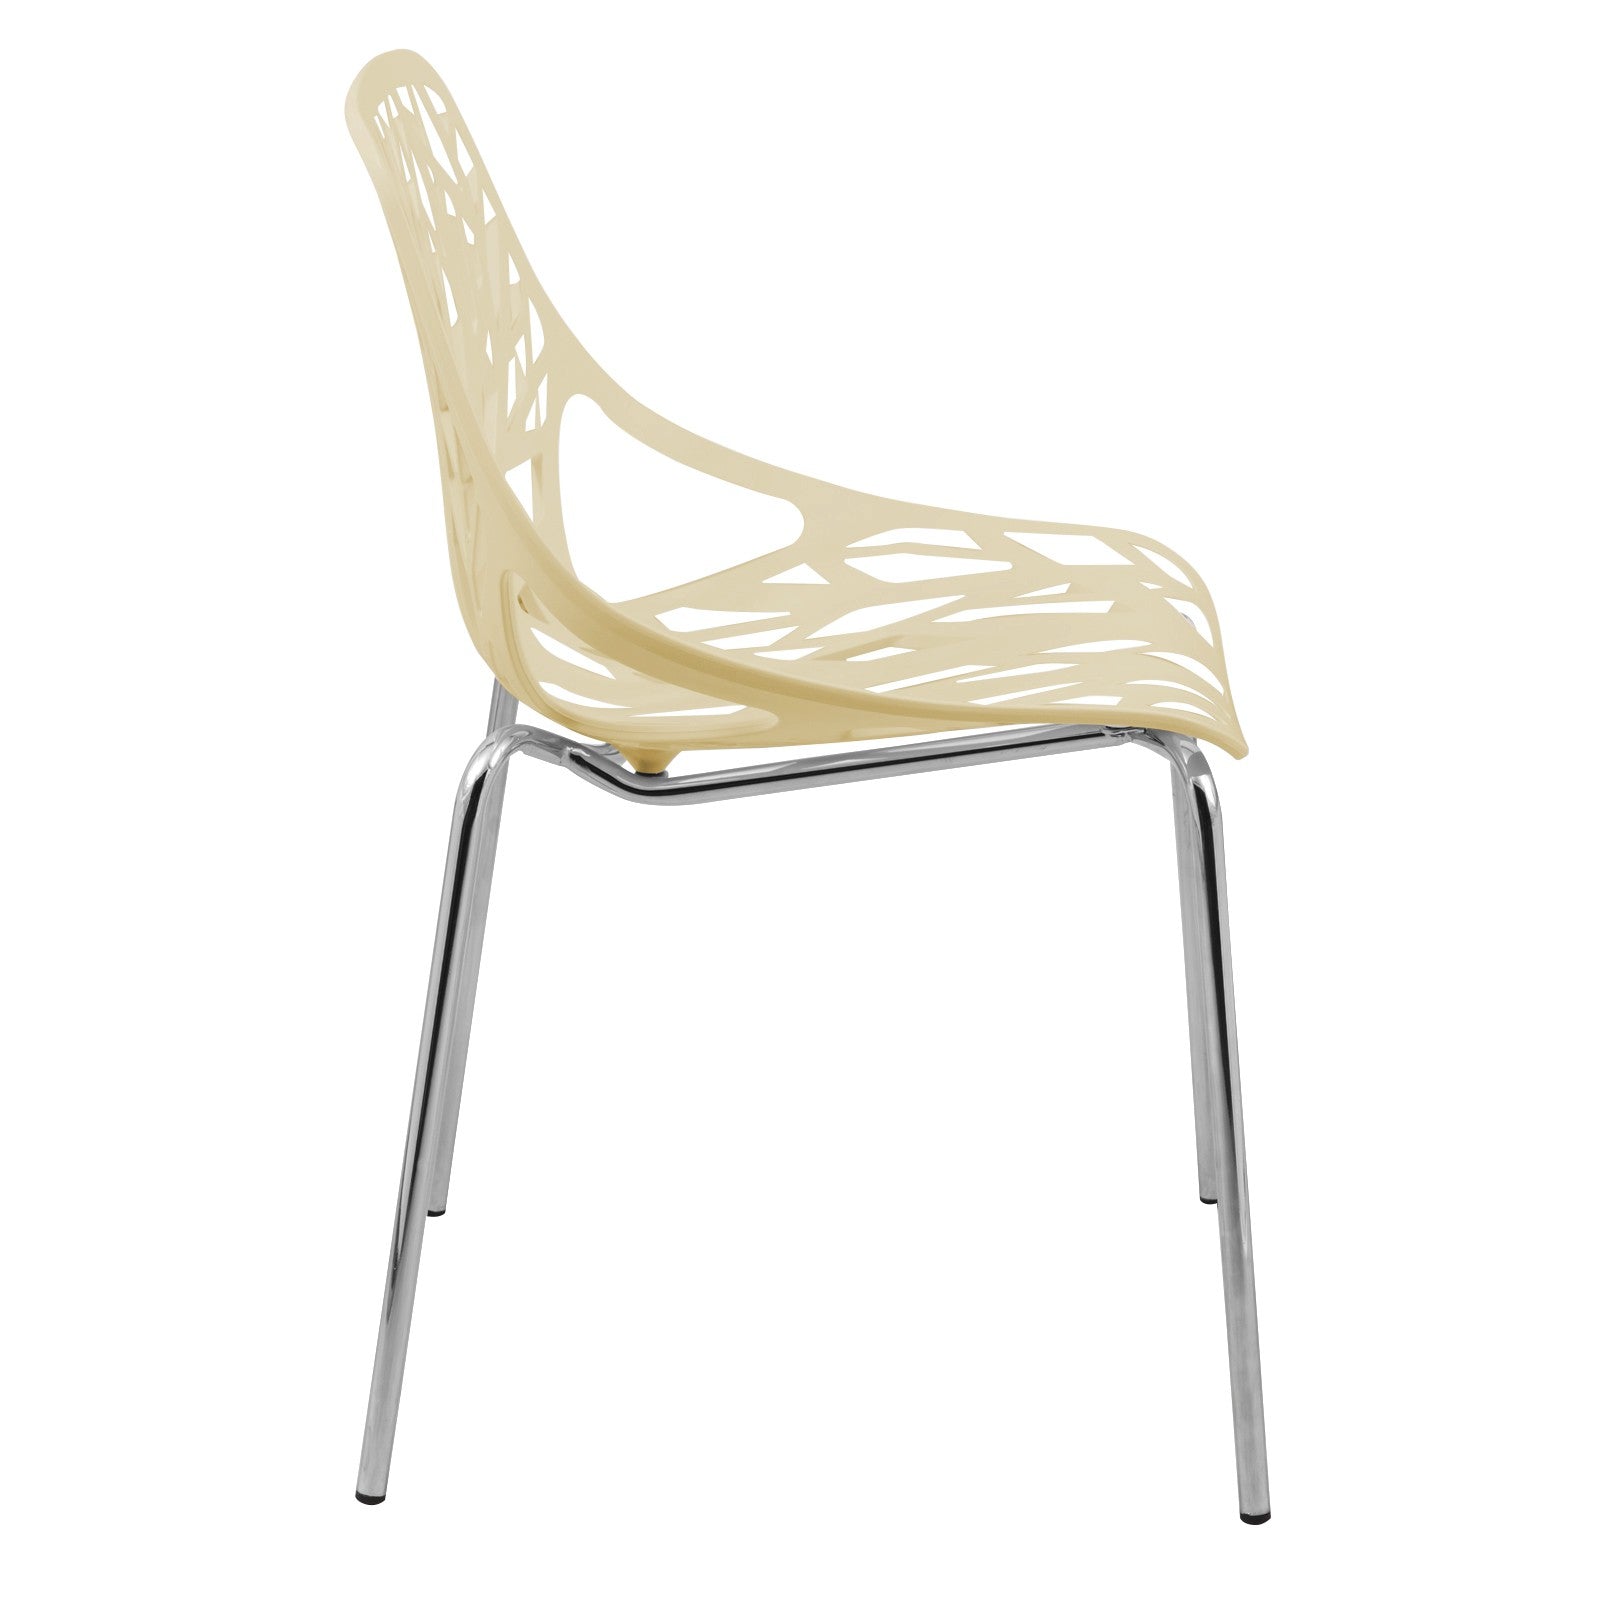 Ashlynn Forest Design Dining Chair - living-essentials